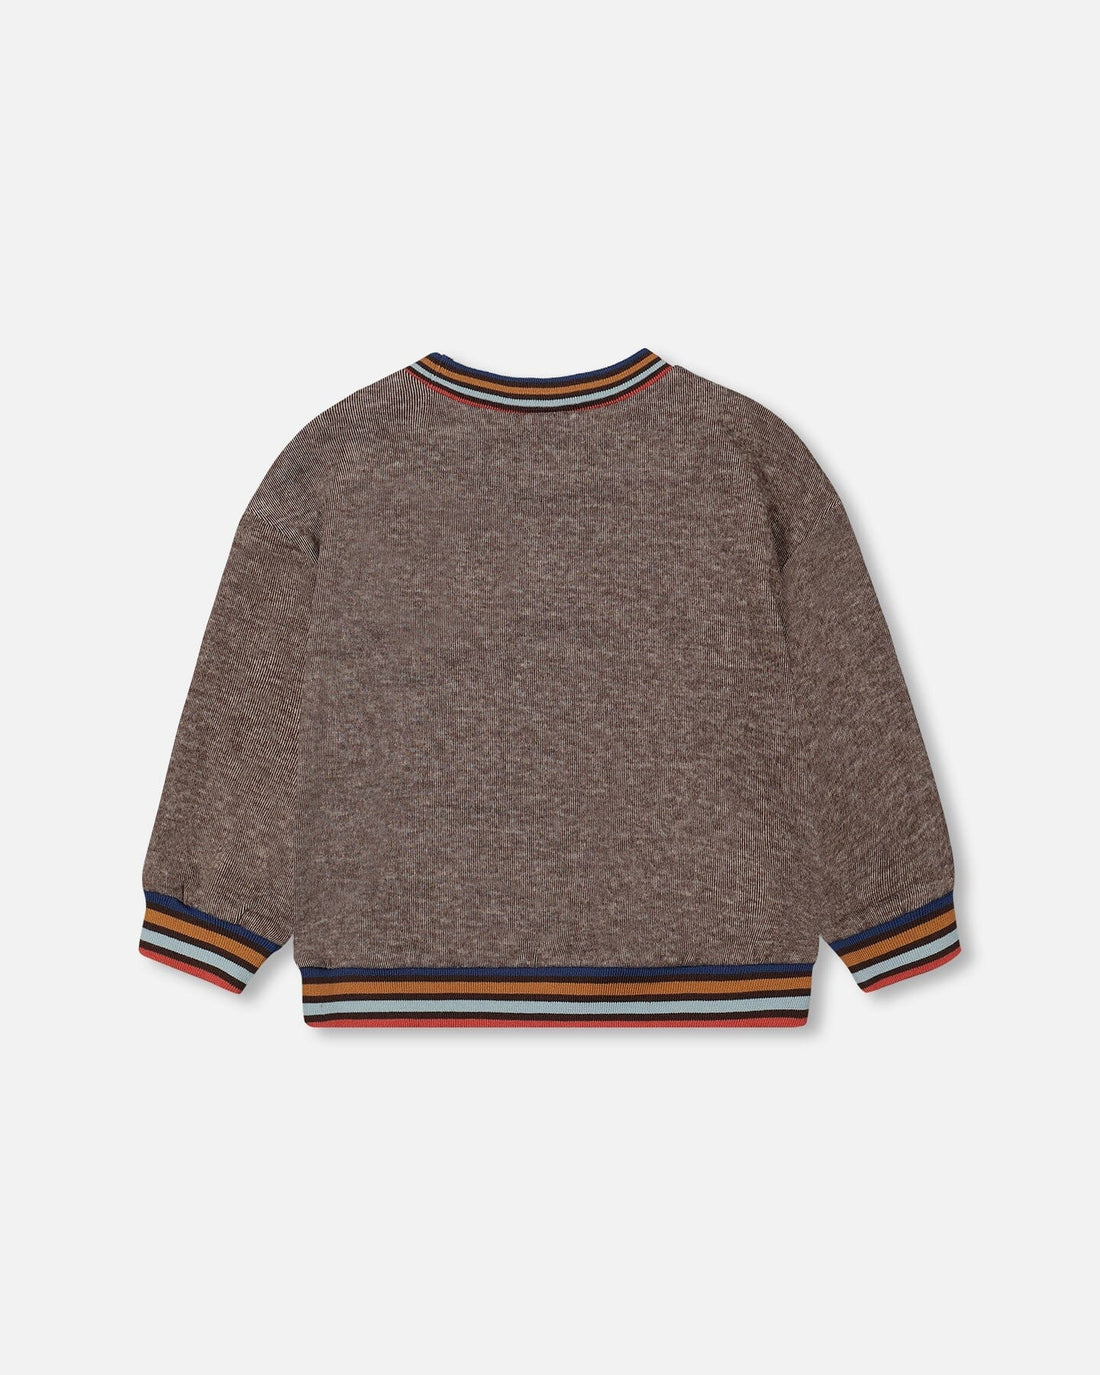 Super Soft Brushed Rib Sweatshirt With Pocket Brown Mix